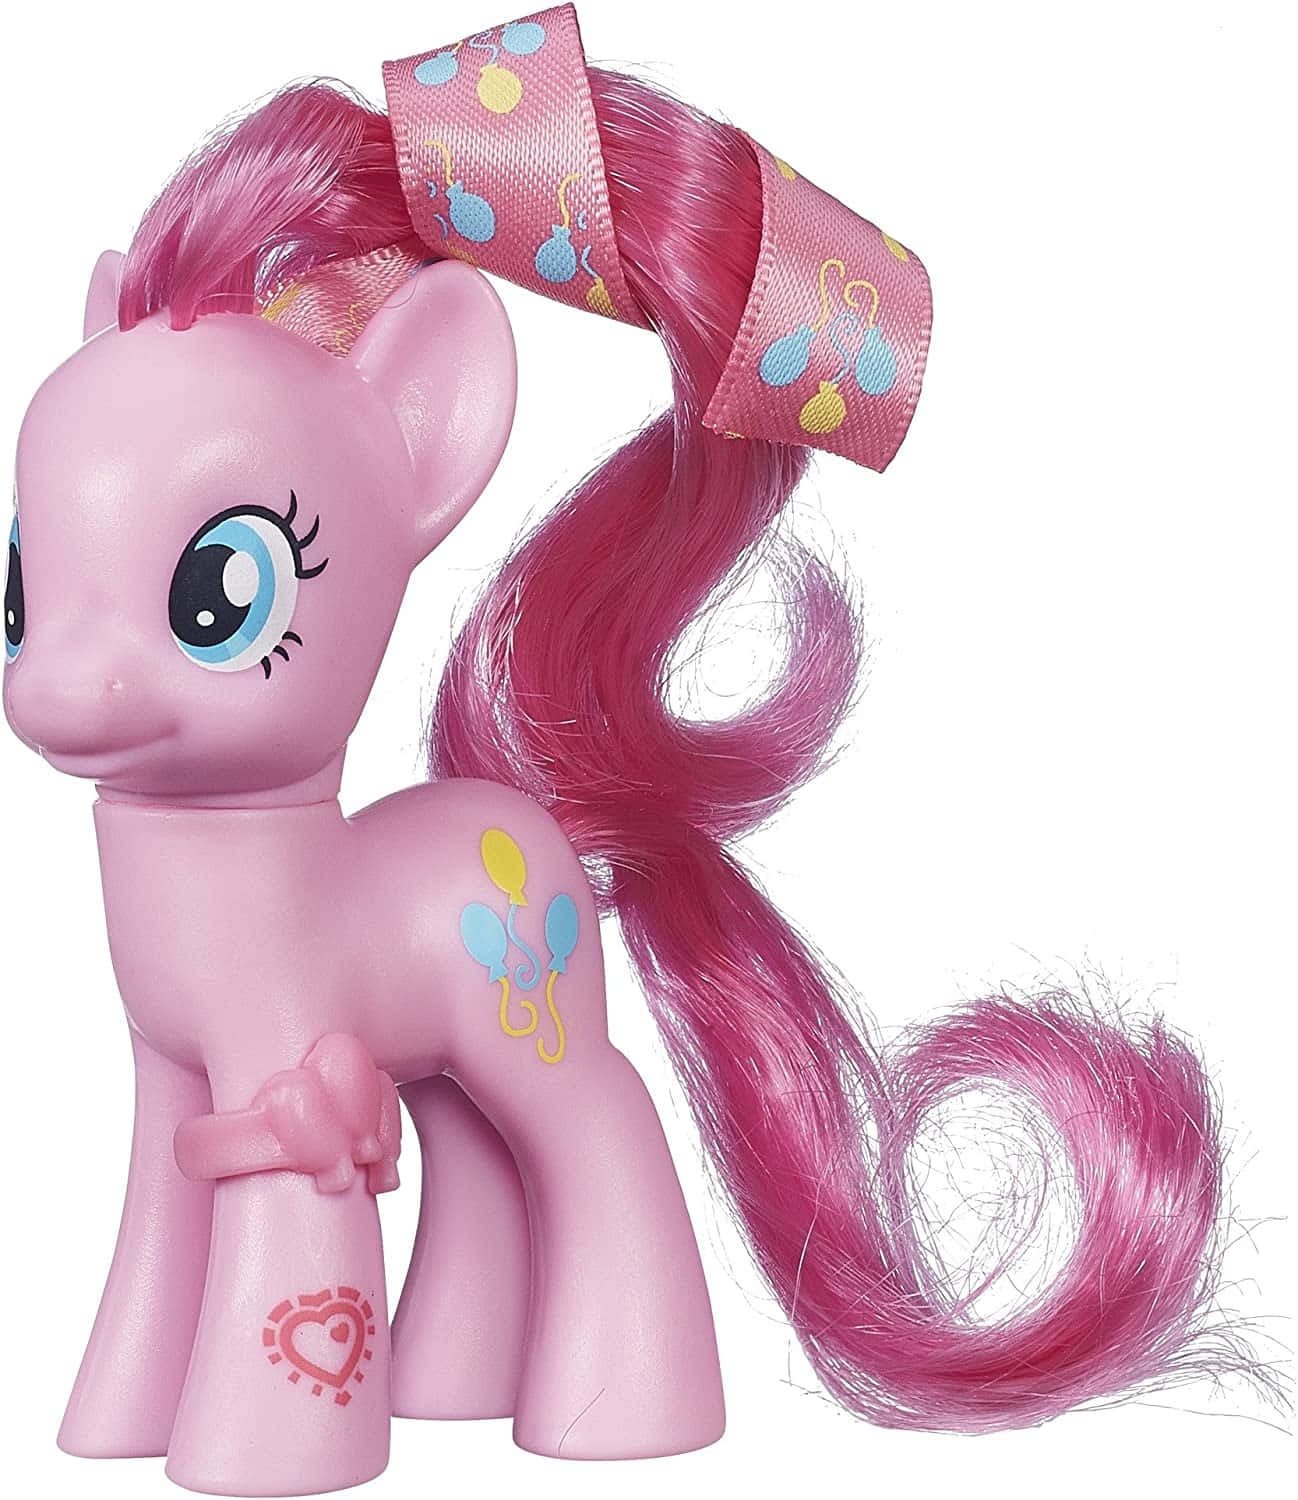 Imagende La Figura De Pinkie Pie De My Little Pony.